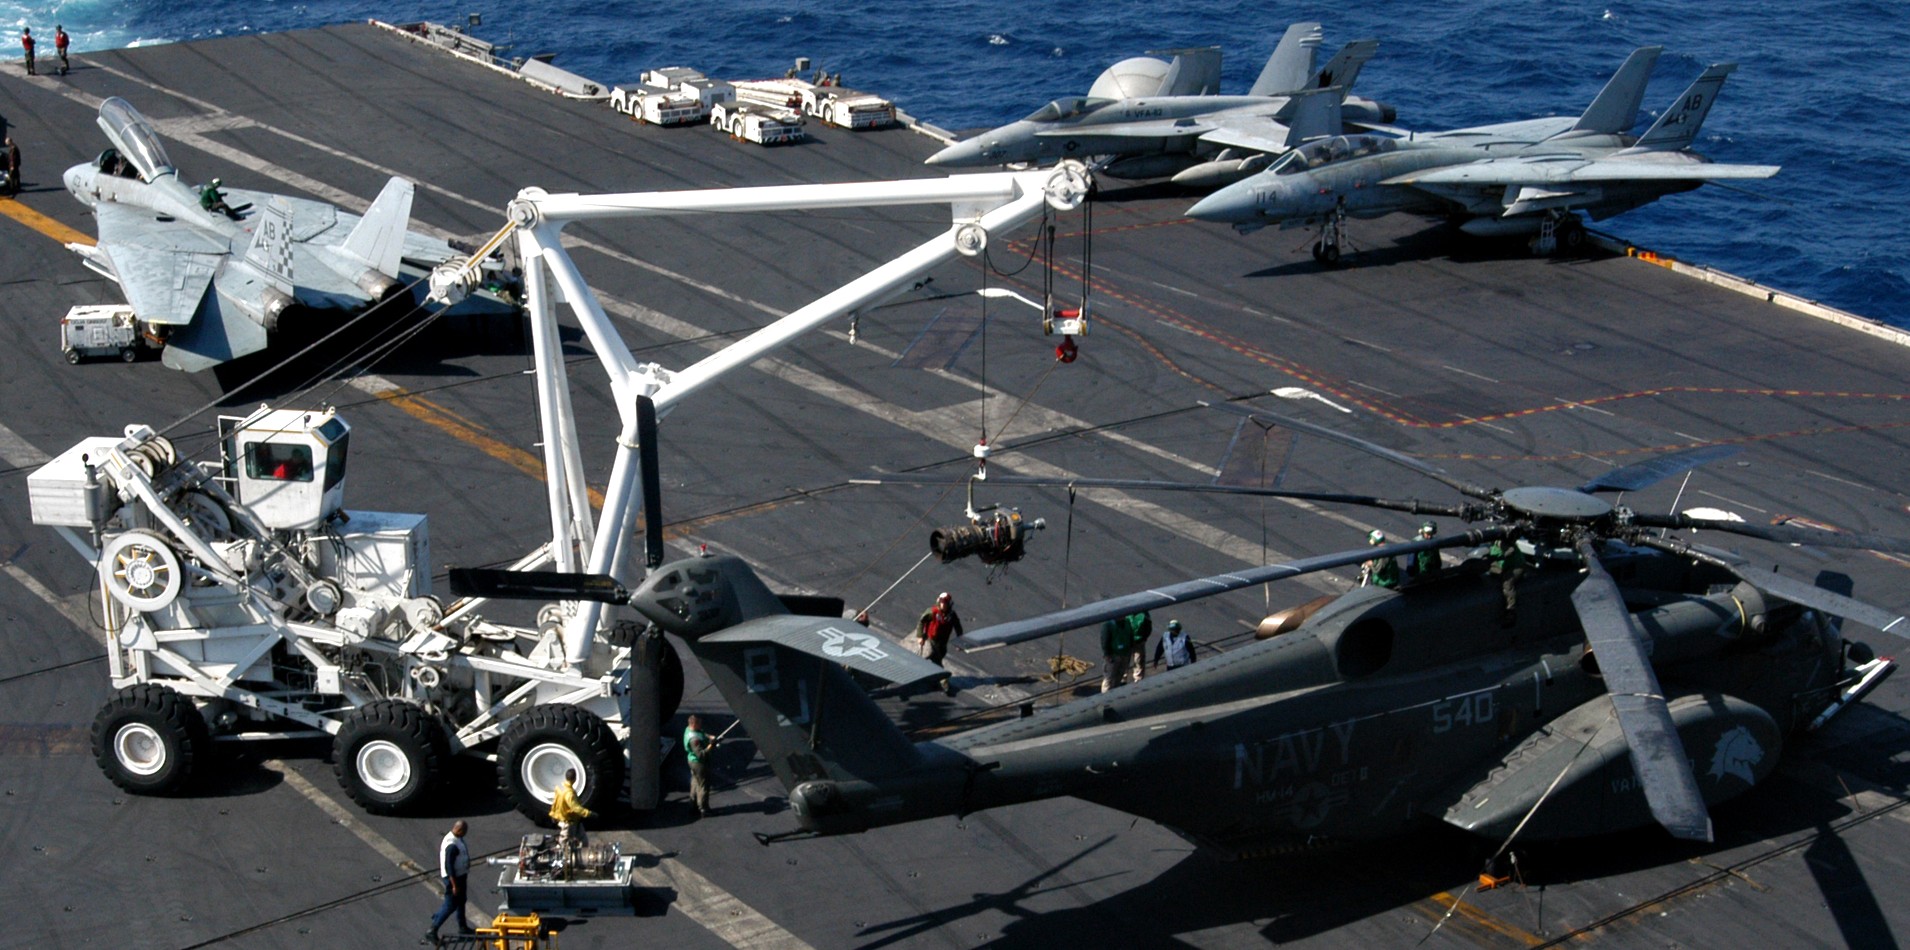 hm-14 vanguard helicopter mine countermeasures squadron navy mh-53e sea dragon 51 uss enterprise cvn-65